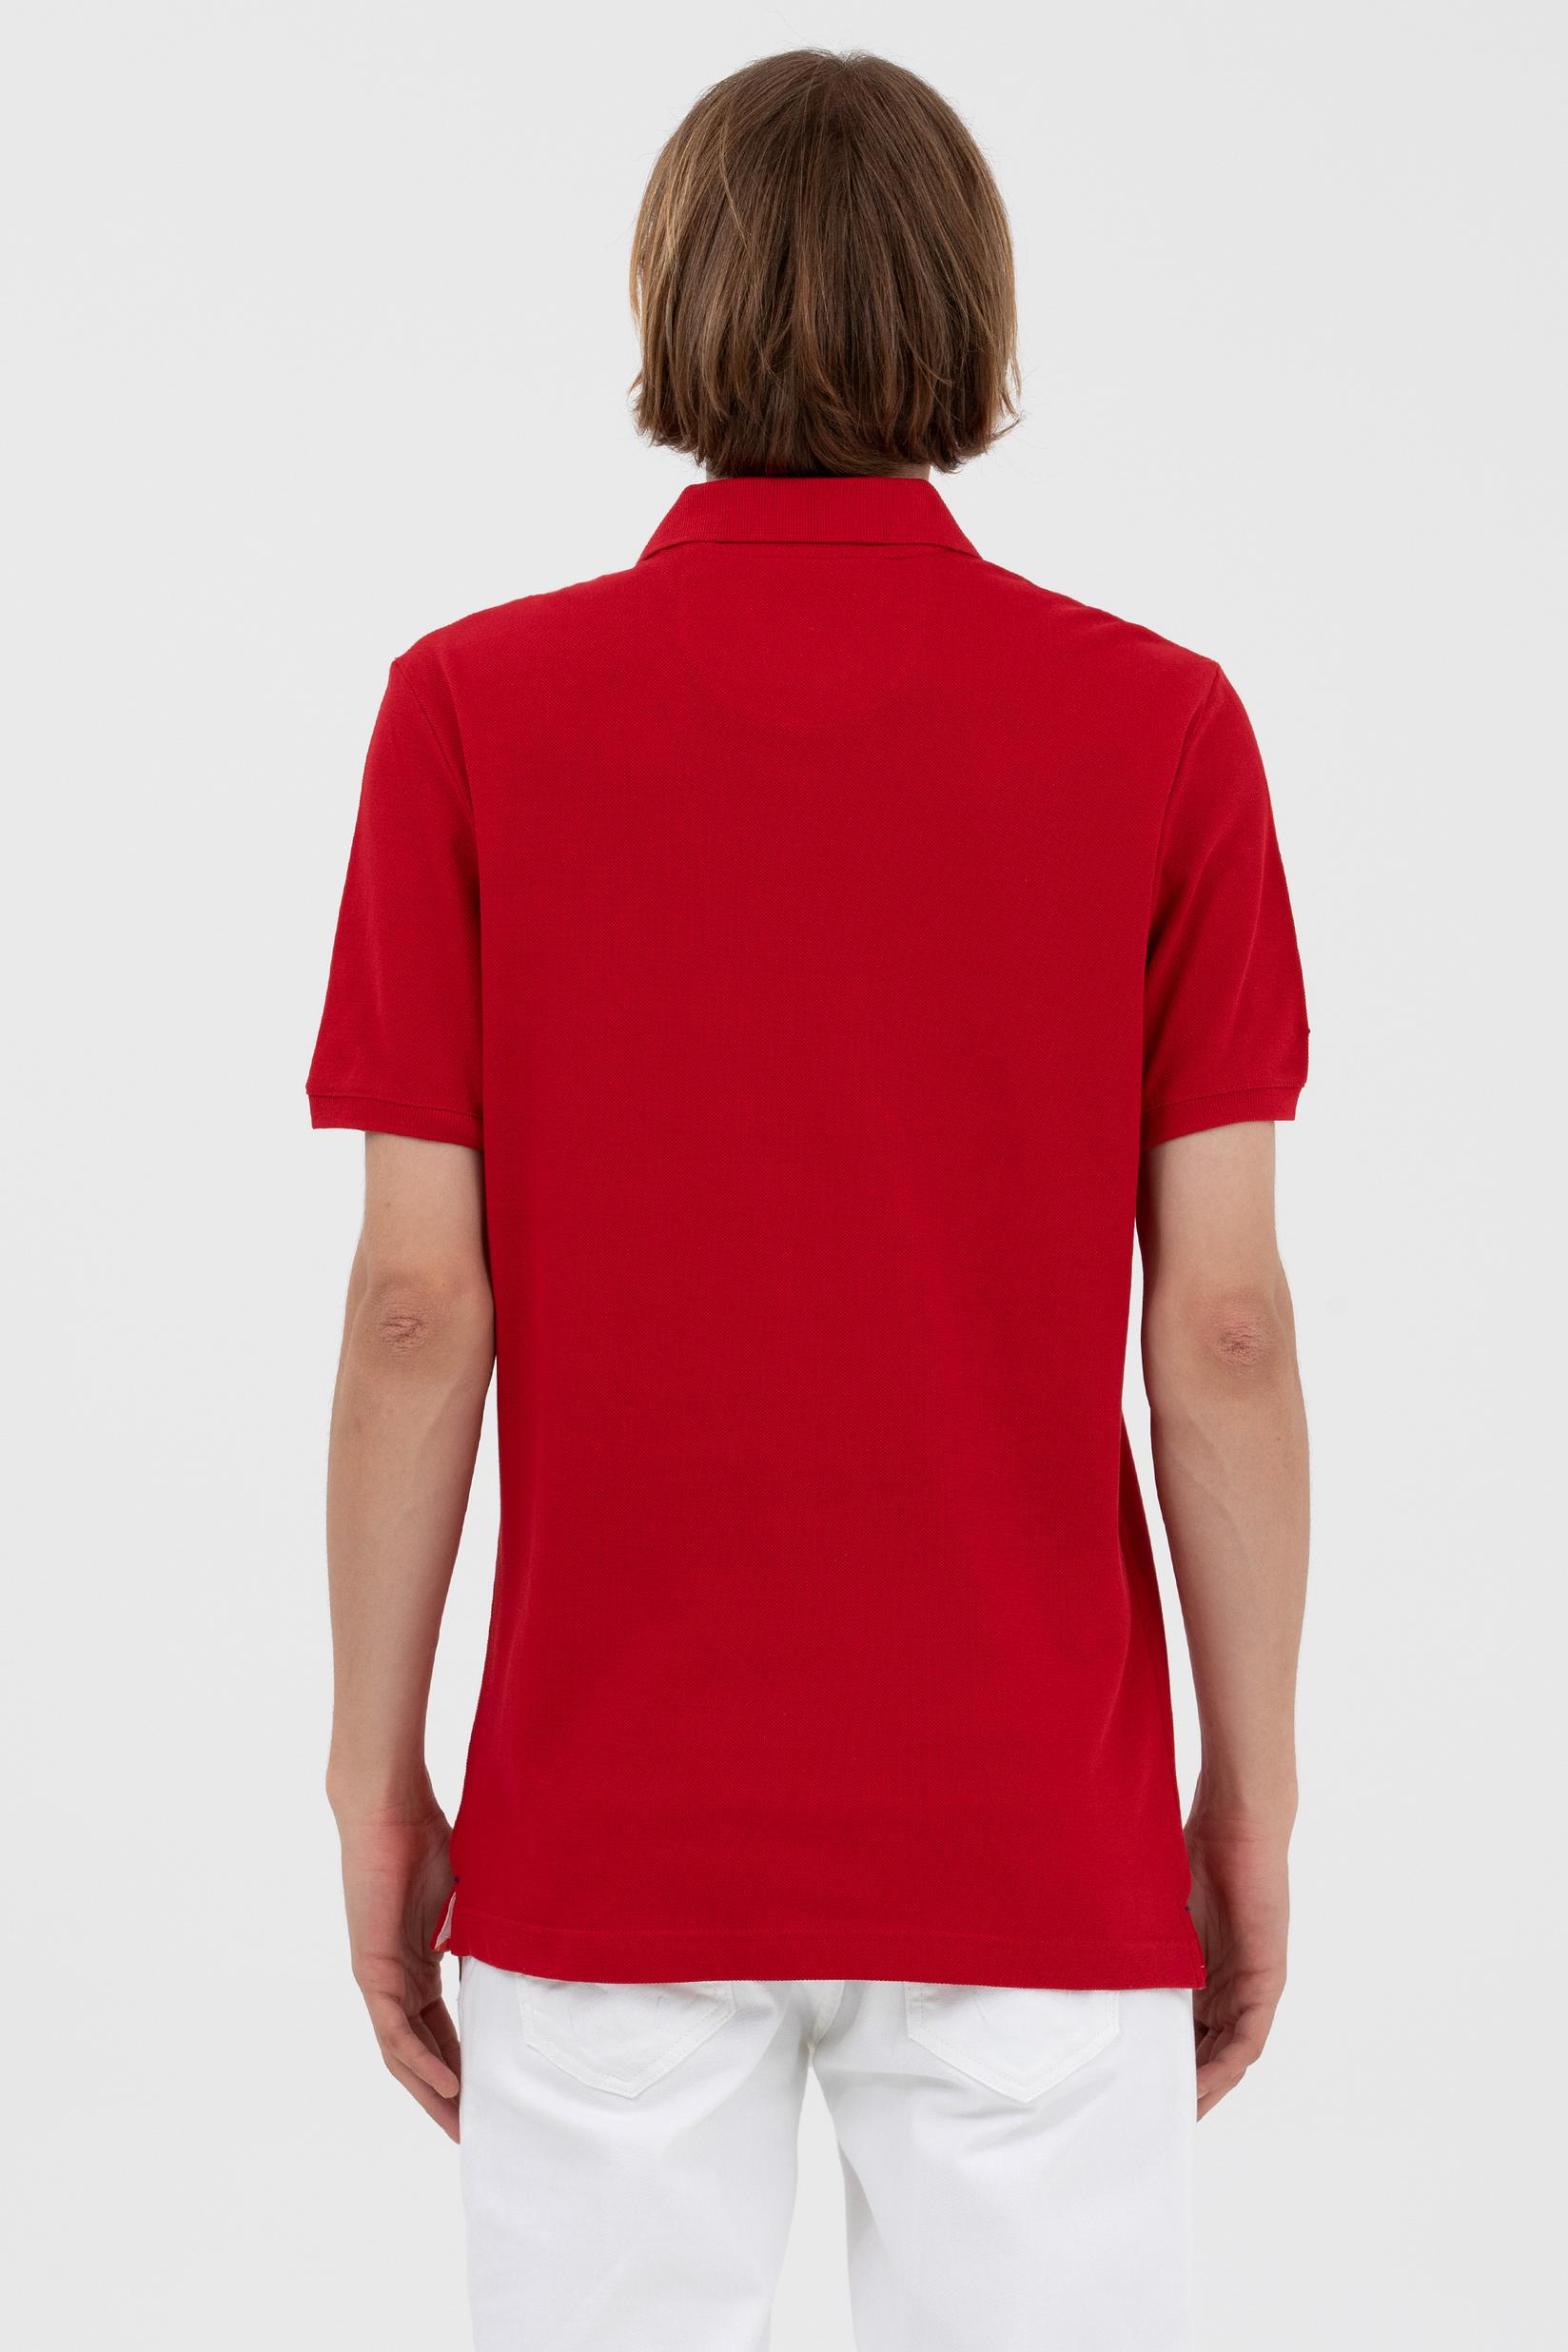 Selected image for U.S. POLO ASSN. Muška majica Basic crvena